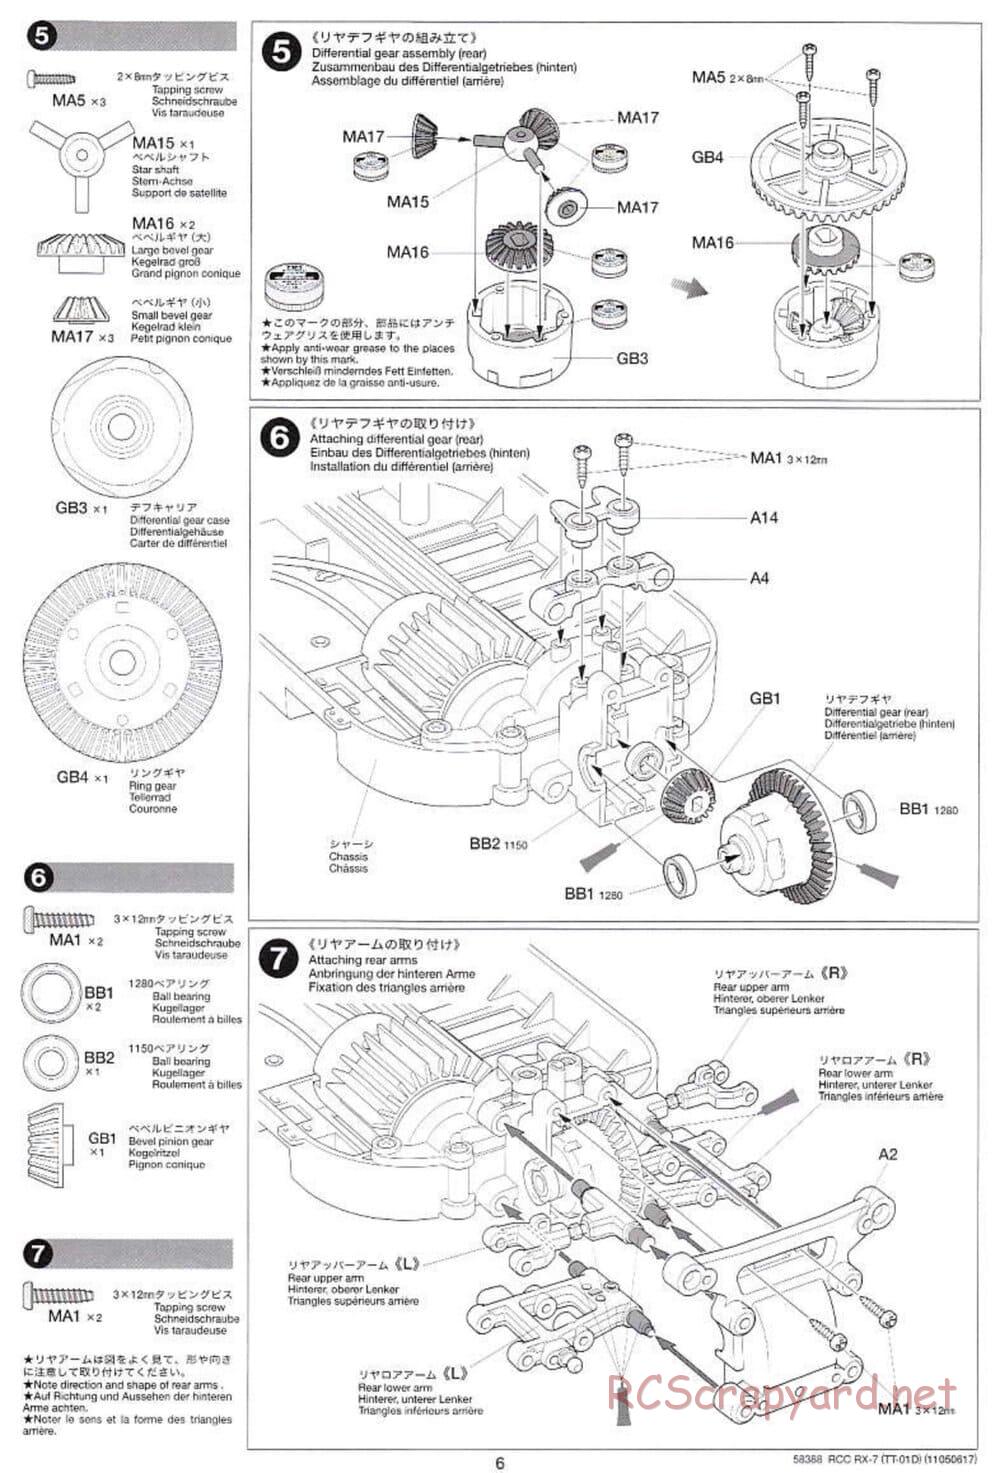 Tamiya - Mazda RX-7 - Drift Spec - TT-01D Chassis - Manual - Page 6